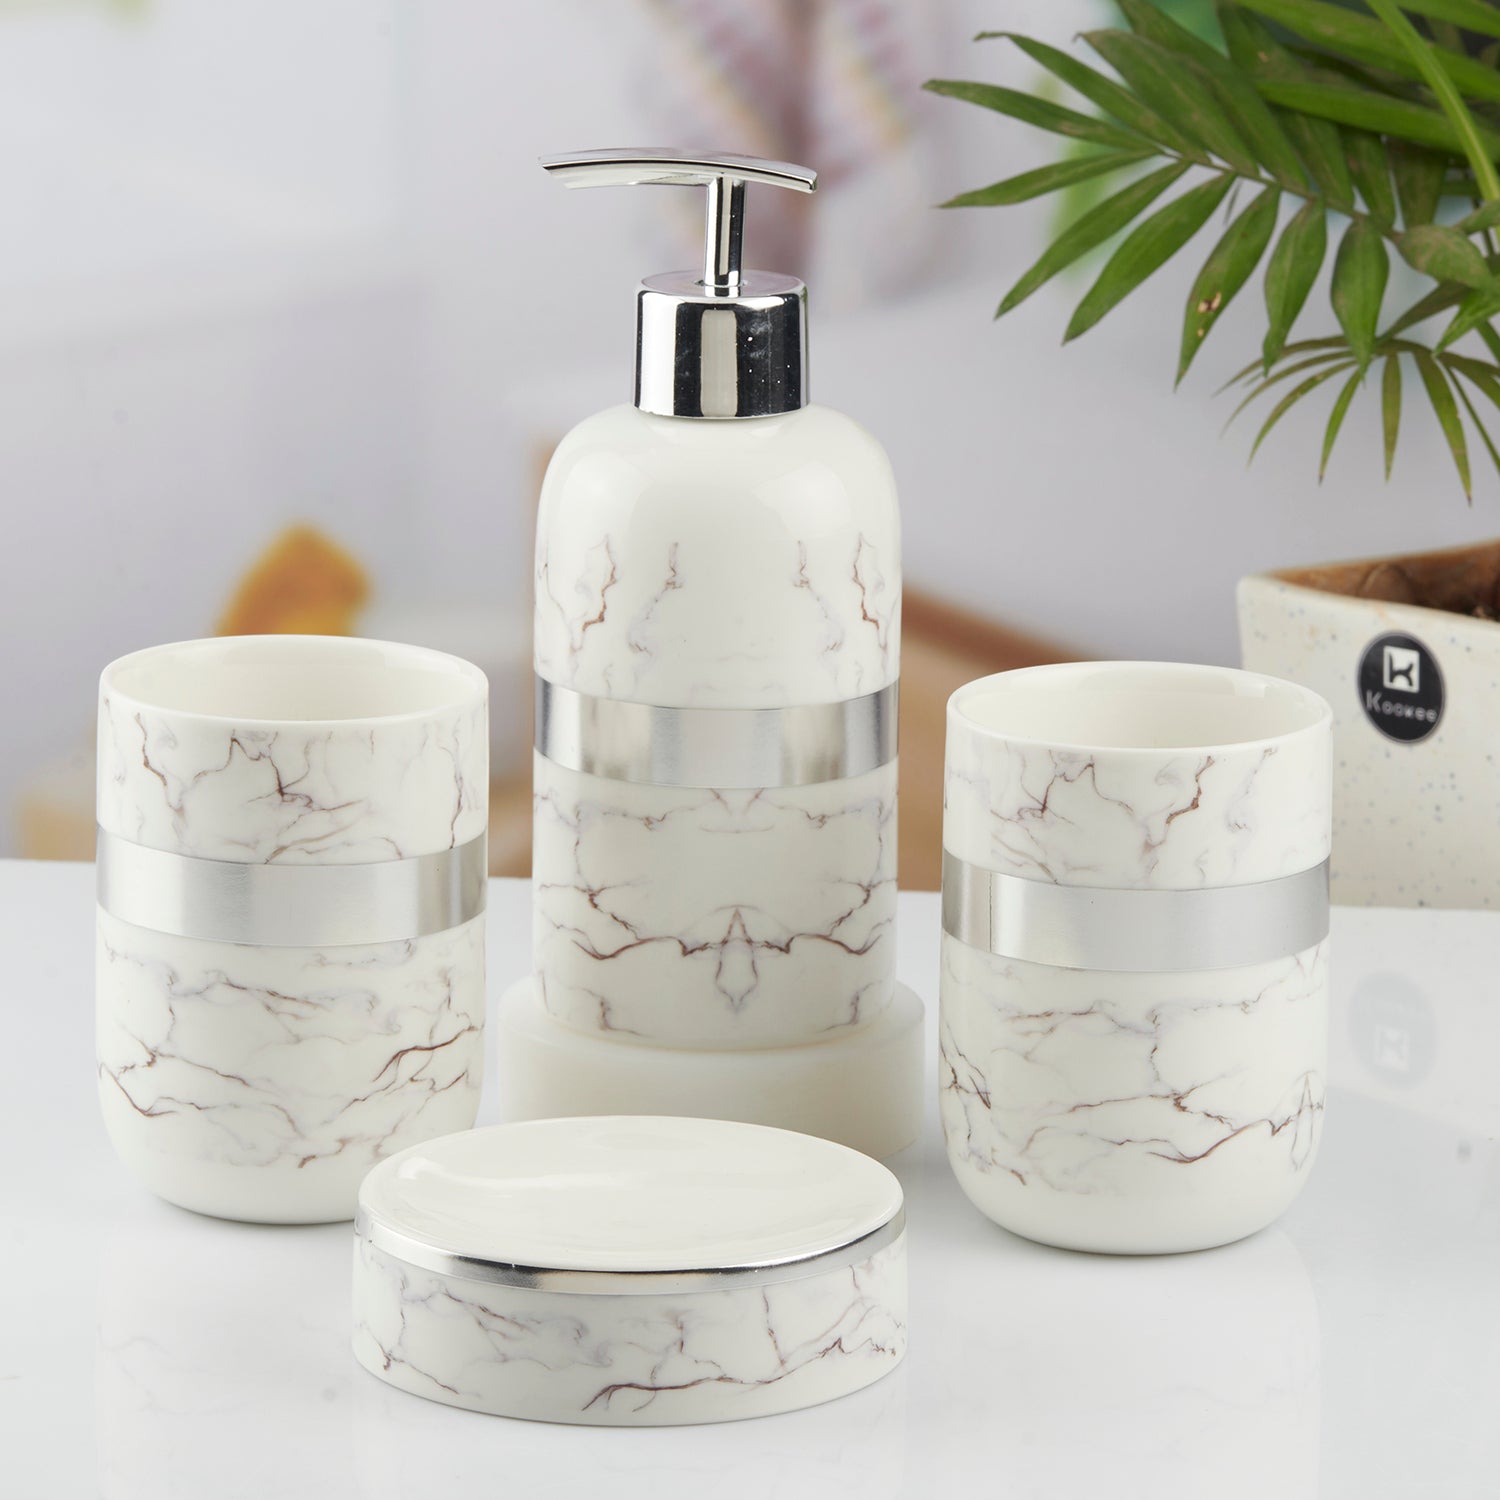 Ceramic Bathroom Set of 4 with Soap Dispenser (10376)